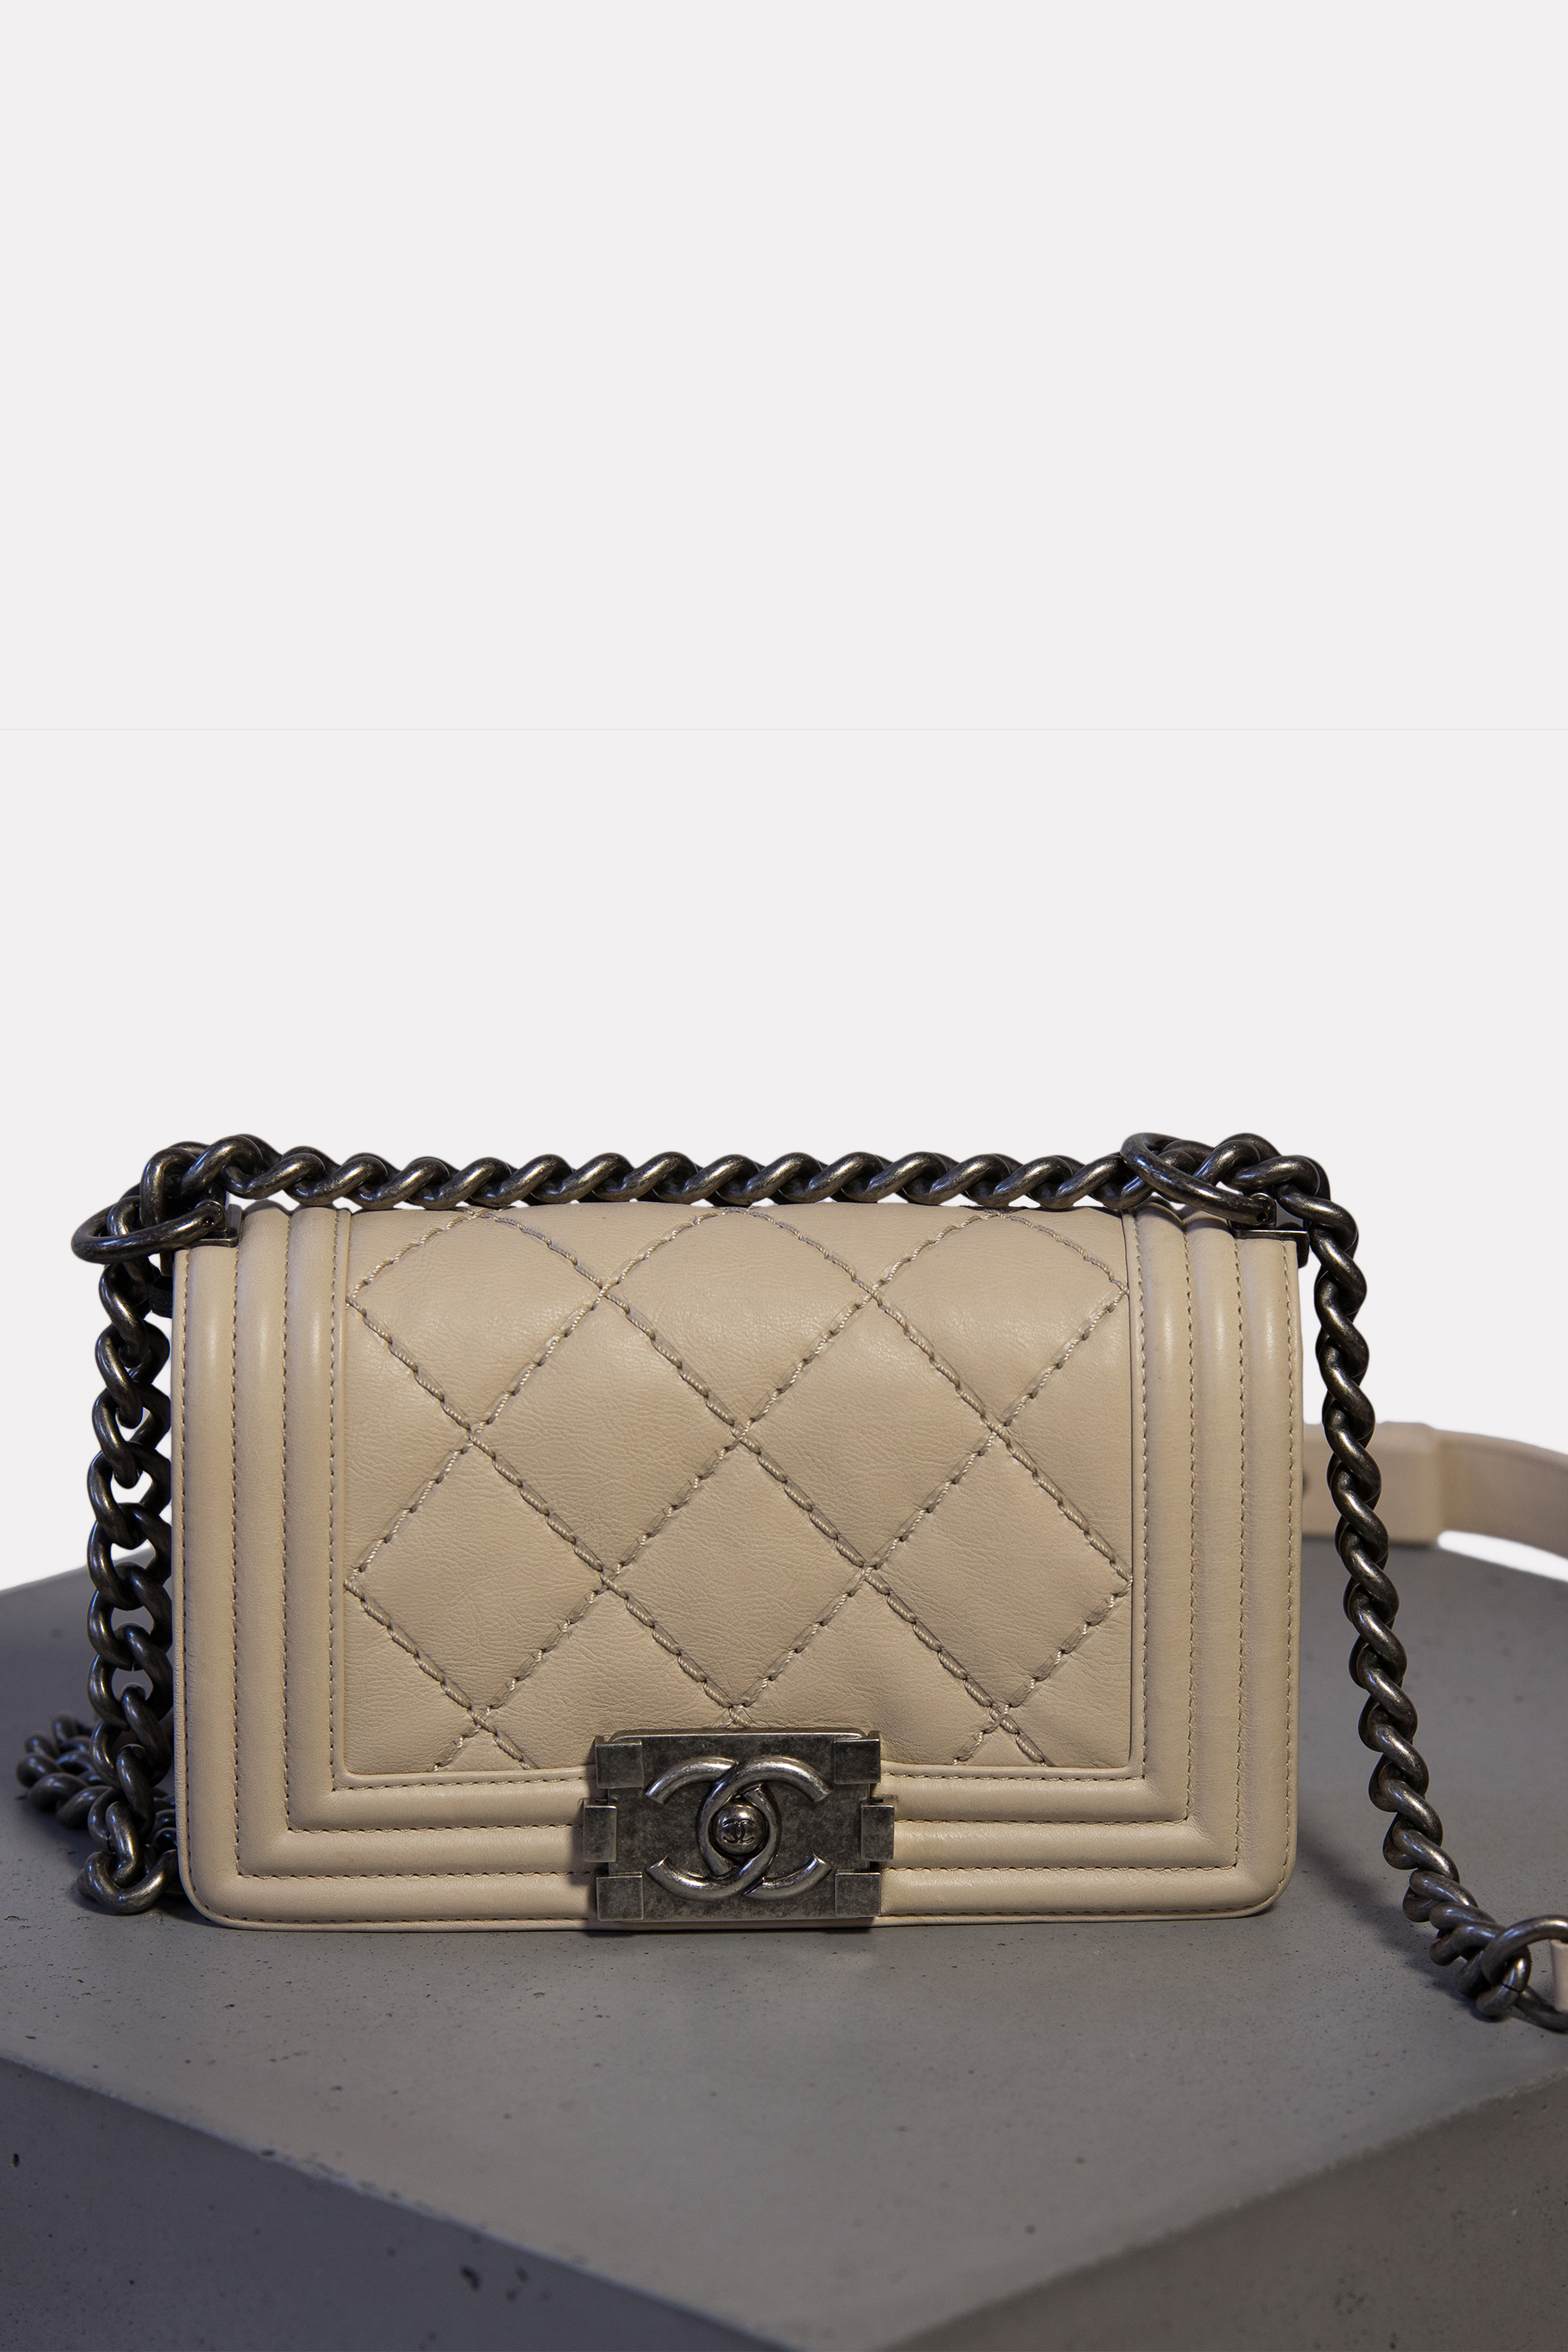 Chanel Boy Bag - Huntessa Luxury Online Consignment Boutique